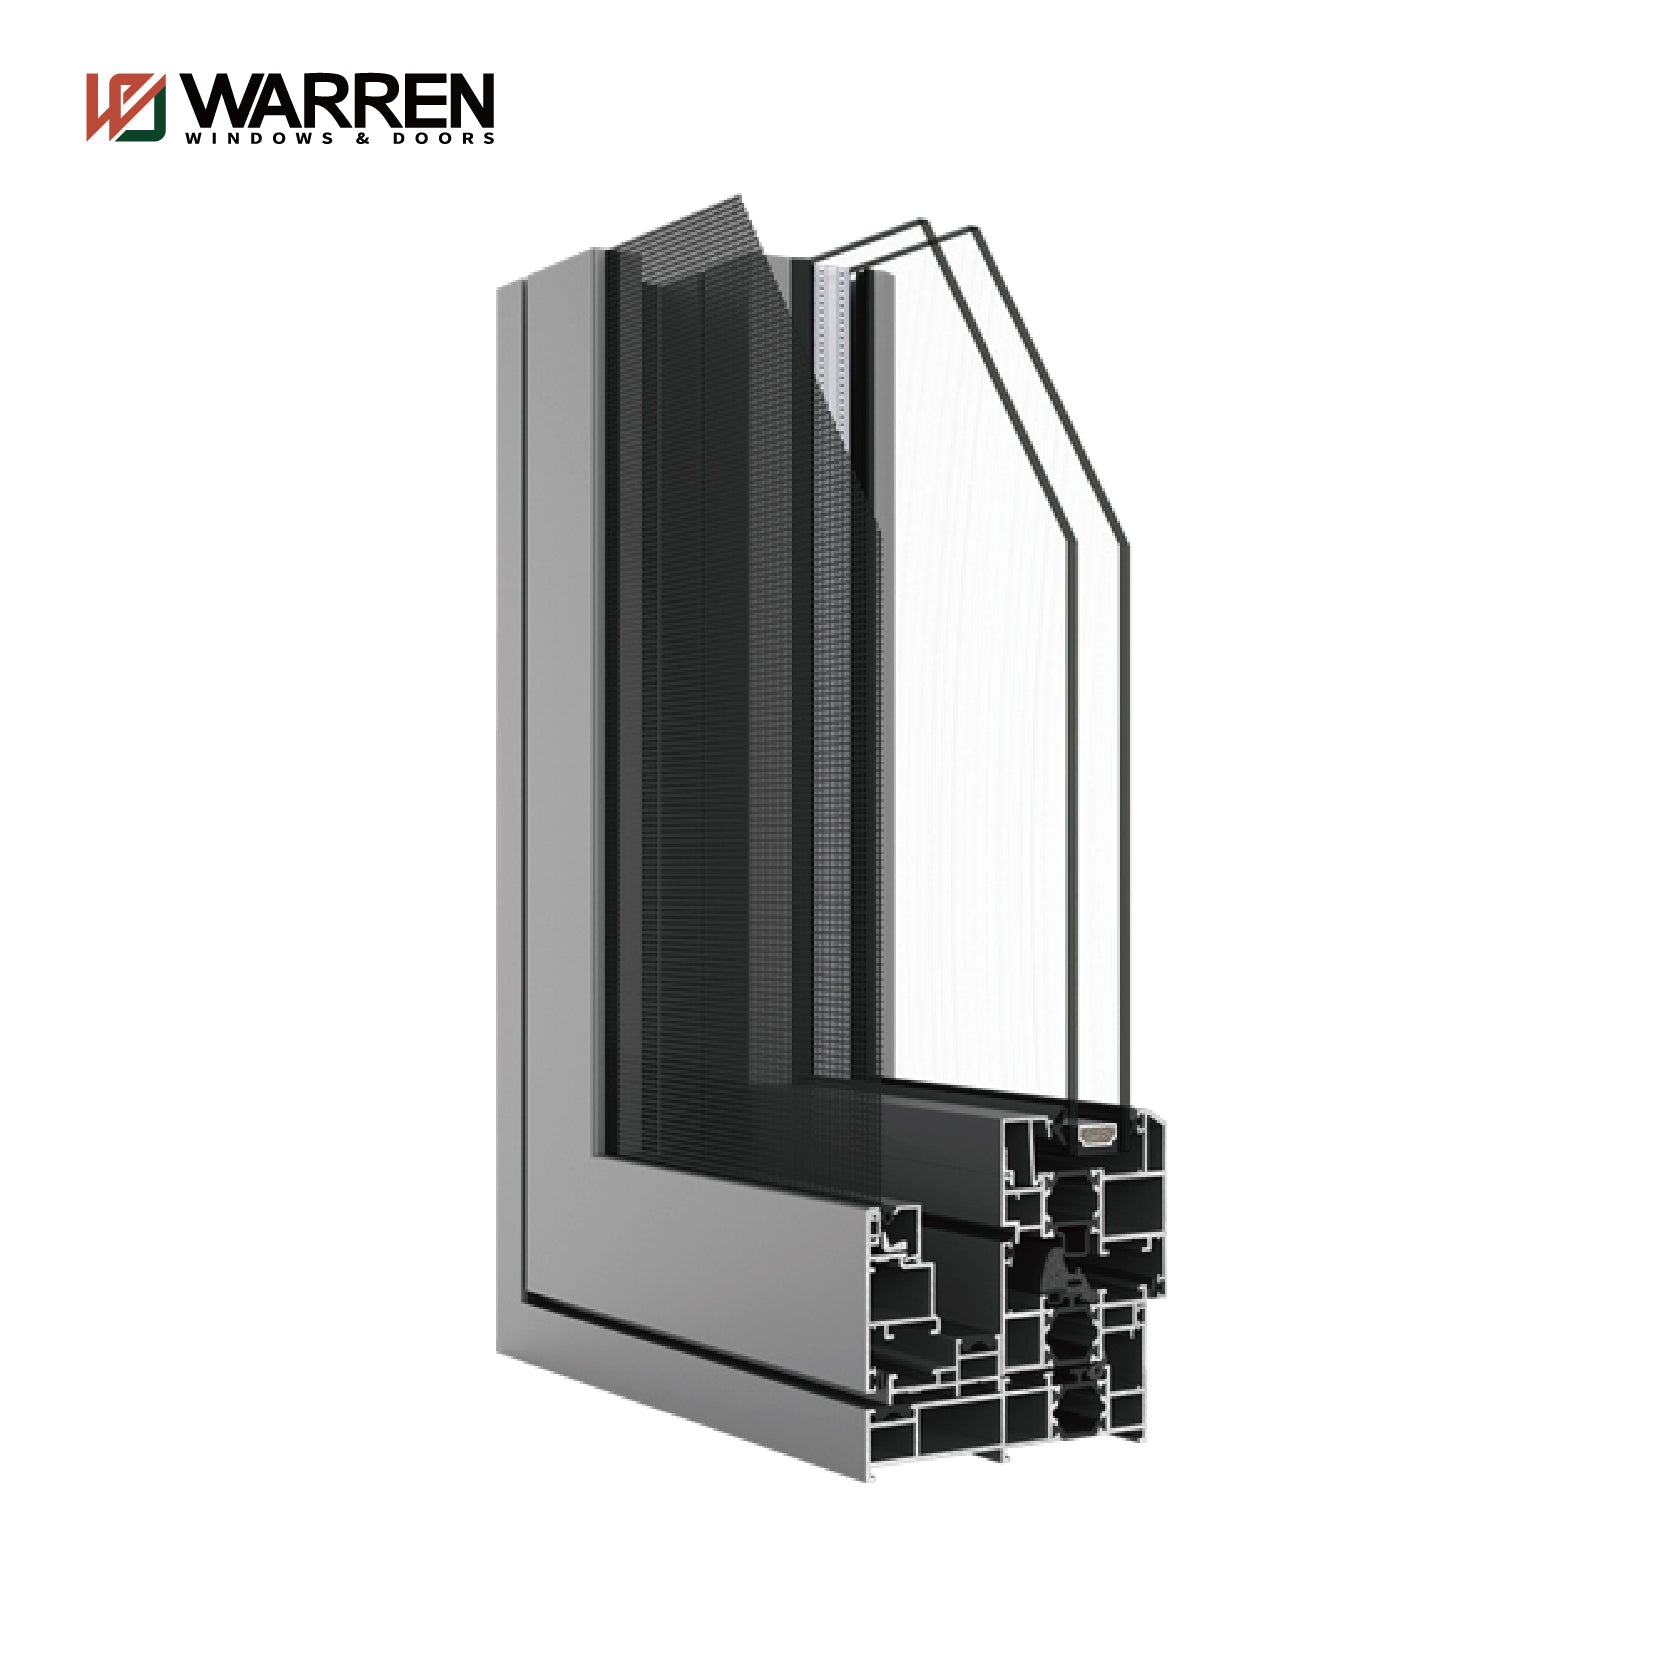 Warren Sound Insulation And Heat Insulation Aluminum Casement Windows Casement Windows With Mosqui To Net